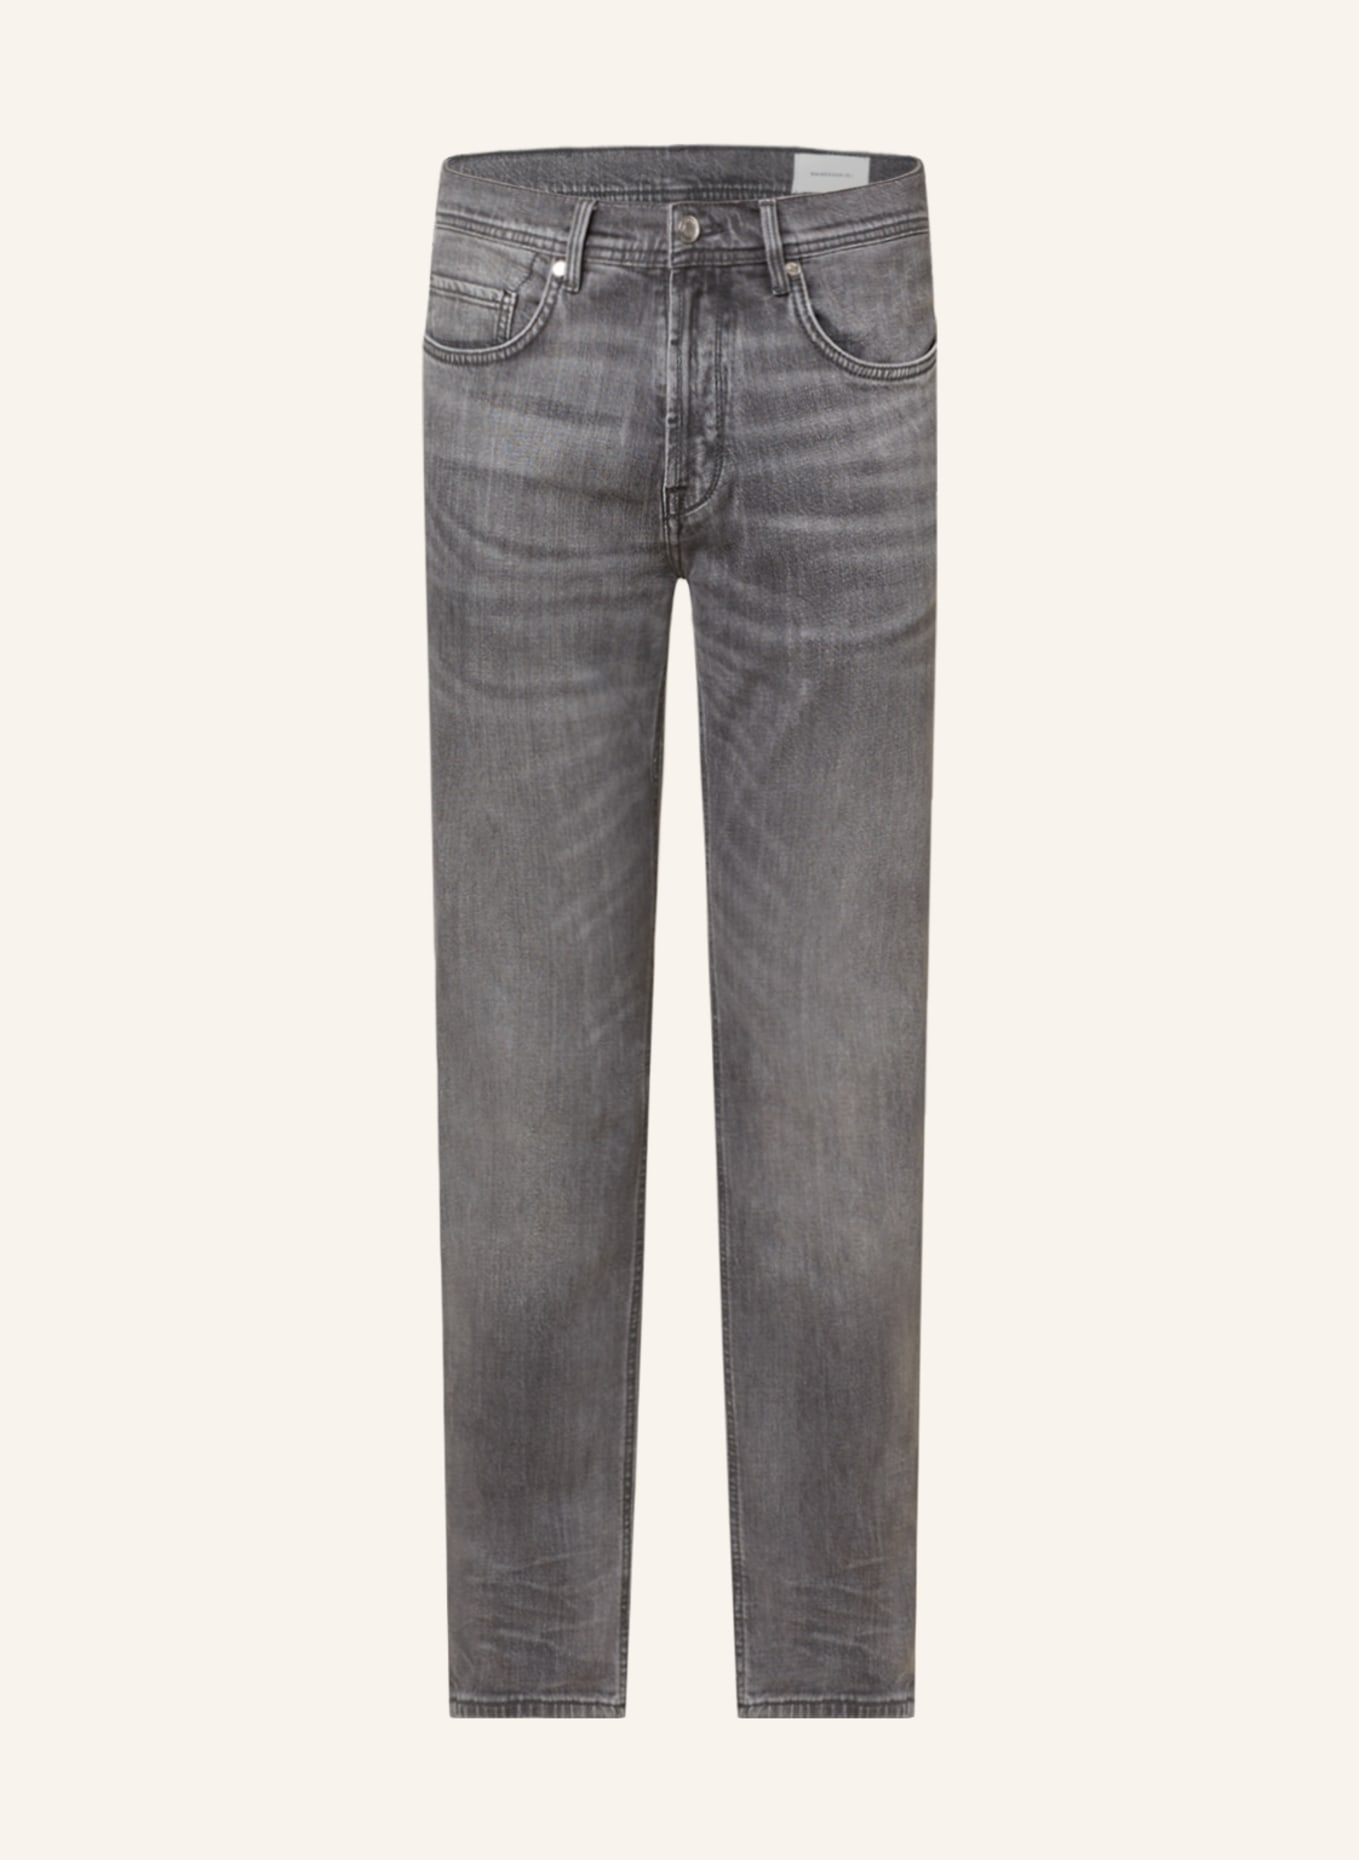 BALDESSARINI Jeans Regular Fit, Farbe: 9834 grey used buffies (Bild 1)